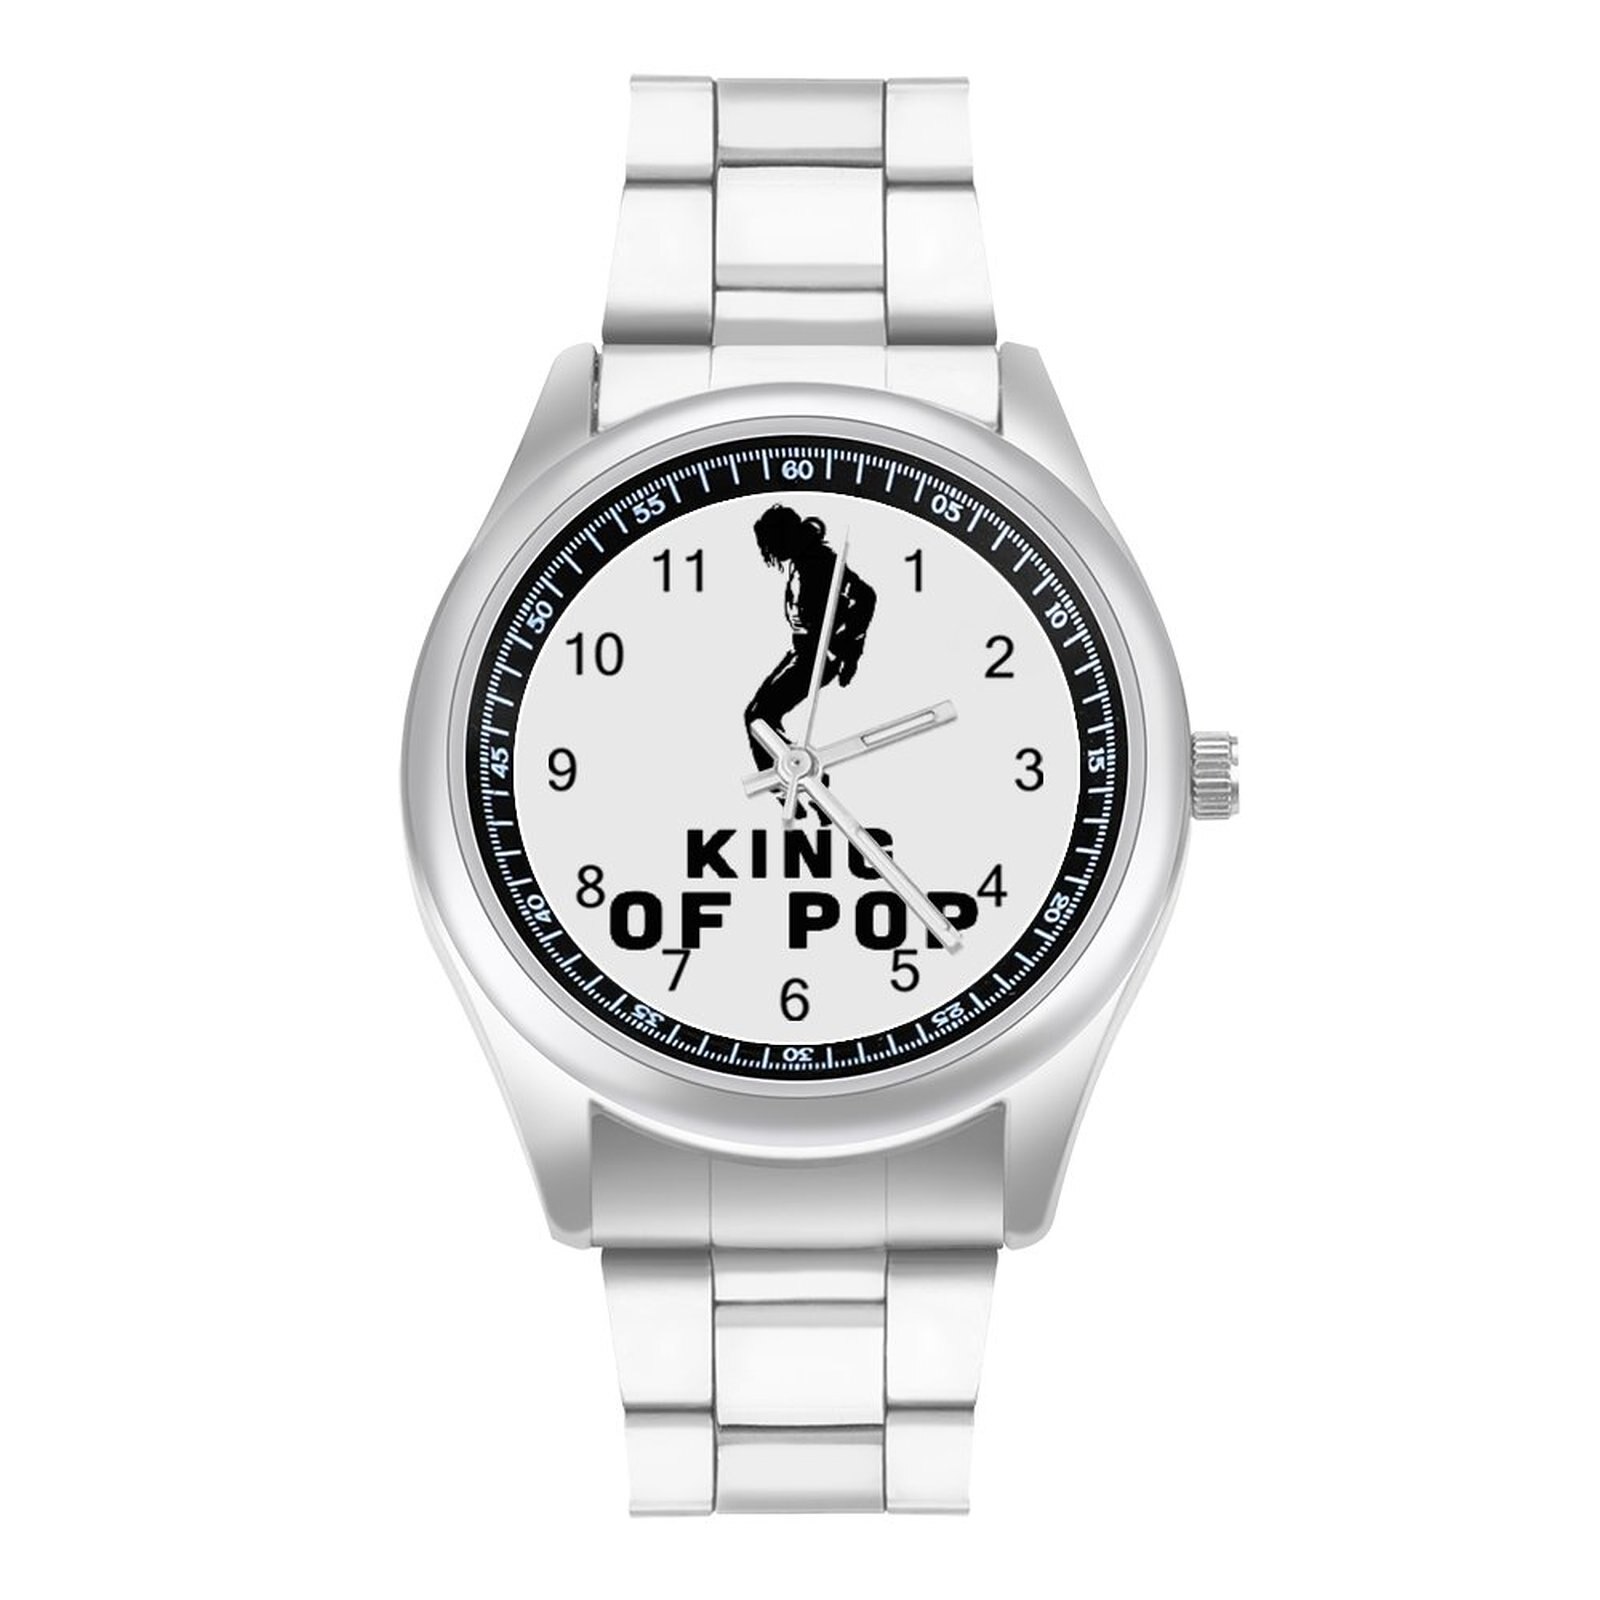 Michael Jackson Quartz Watch Stainless Photo Wrist Watch Teens Sport Original Hit Sales Wristwatch Smart Watches cb5feb1b7314637725a2e7: white-style1|white-style1-1|white-style1-10|white-style1-11|white-style1-12|white-style1-13|white-style1-2|white-style1-3|white-style1-4|white-style1-5|white-style1-6|white-style1-7|white-style1-8|white-style1-9